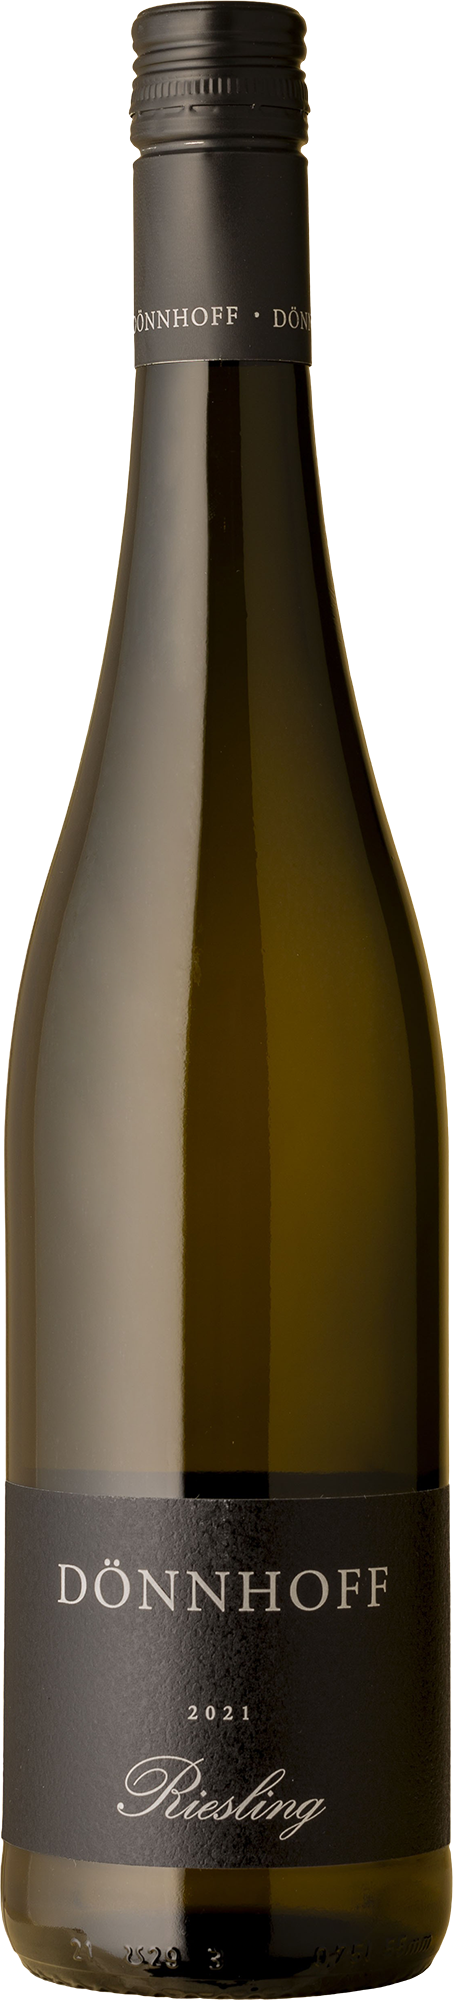 Dönnhoff - Nahe Riesling 2021 White Wine